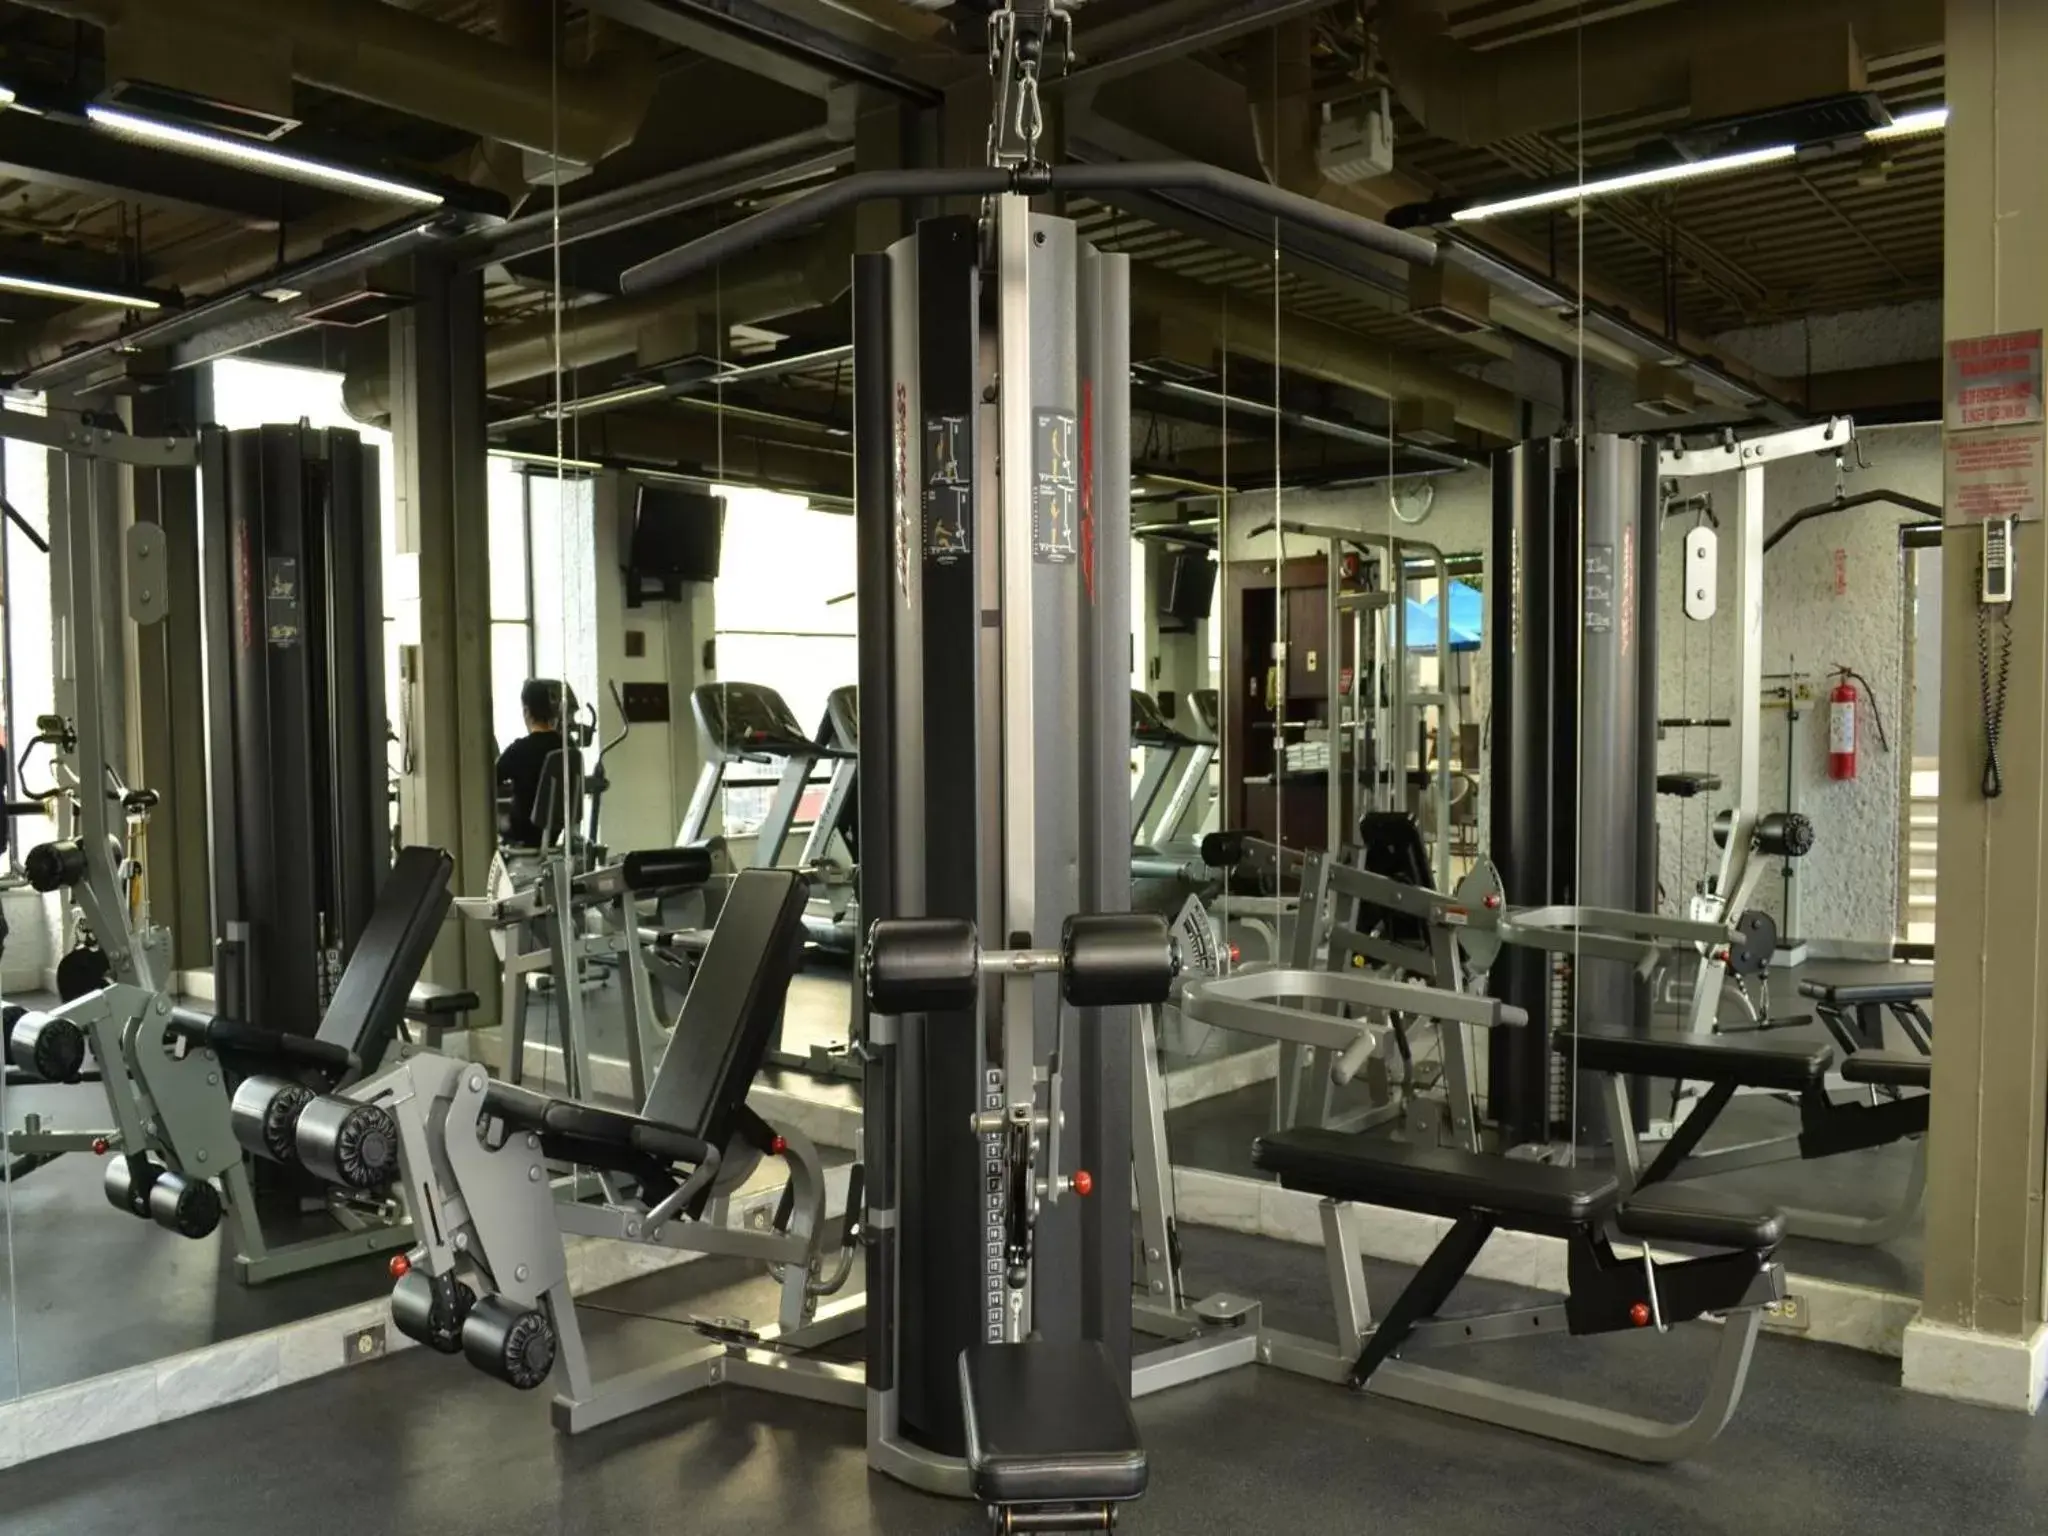 Fitness centre/facilities, Fitness Center/Facilities in Galeria Plaza Reforma